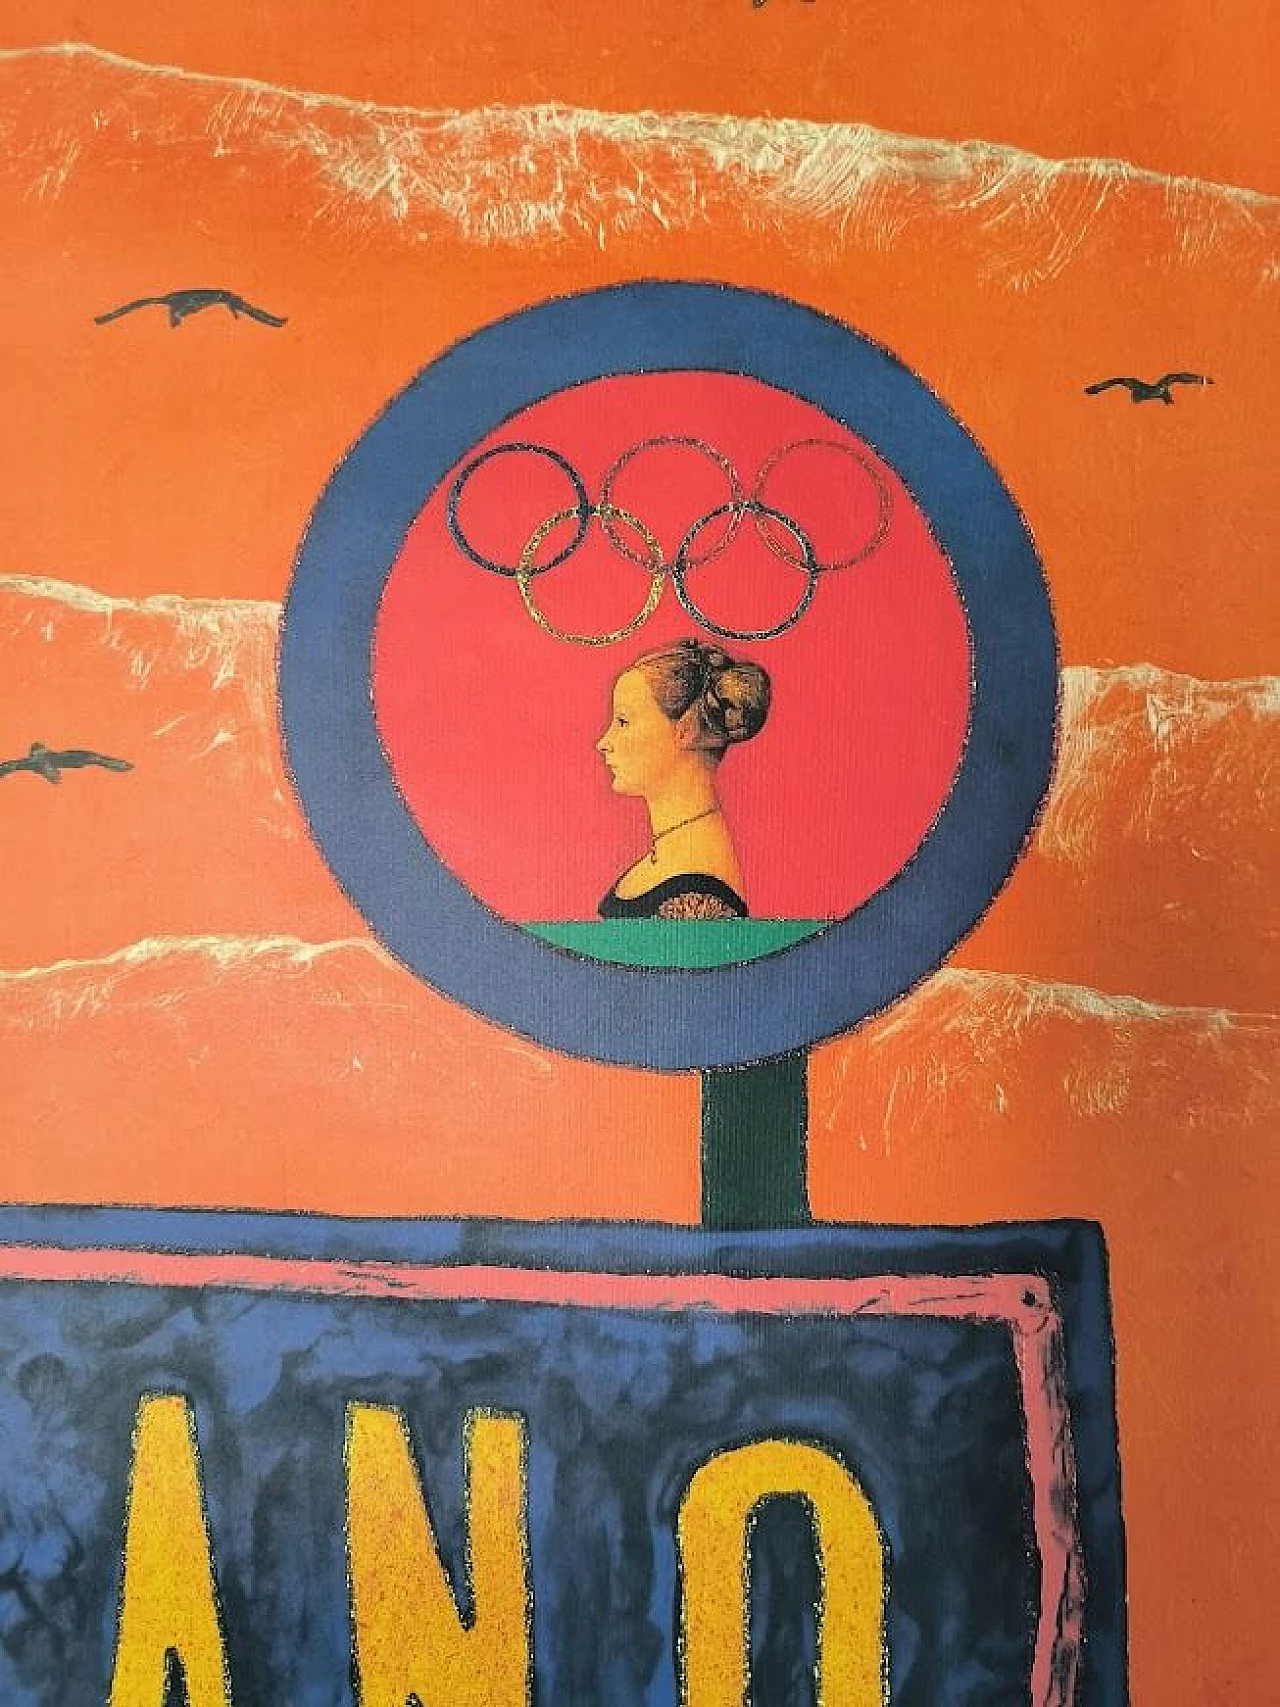 Stefano Pizzi, Milan tourism promotion poster, 1980s 7